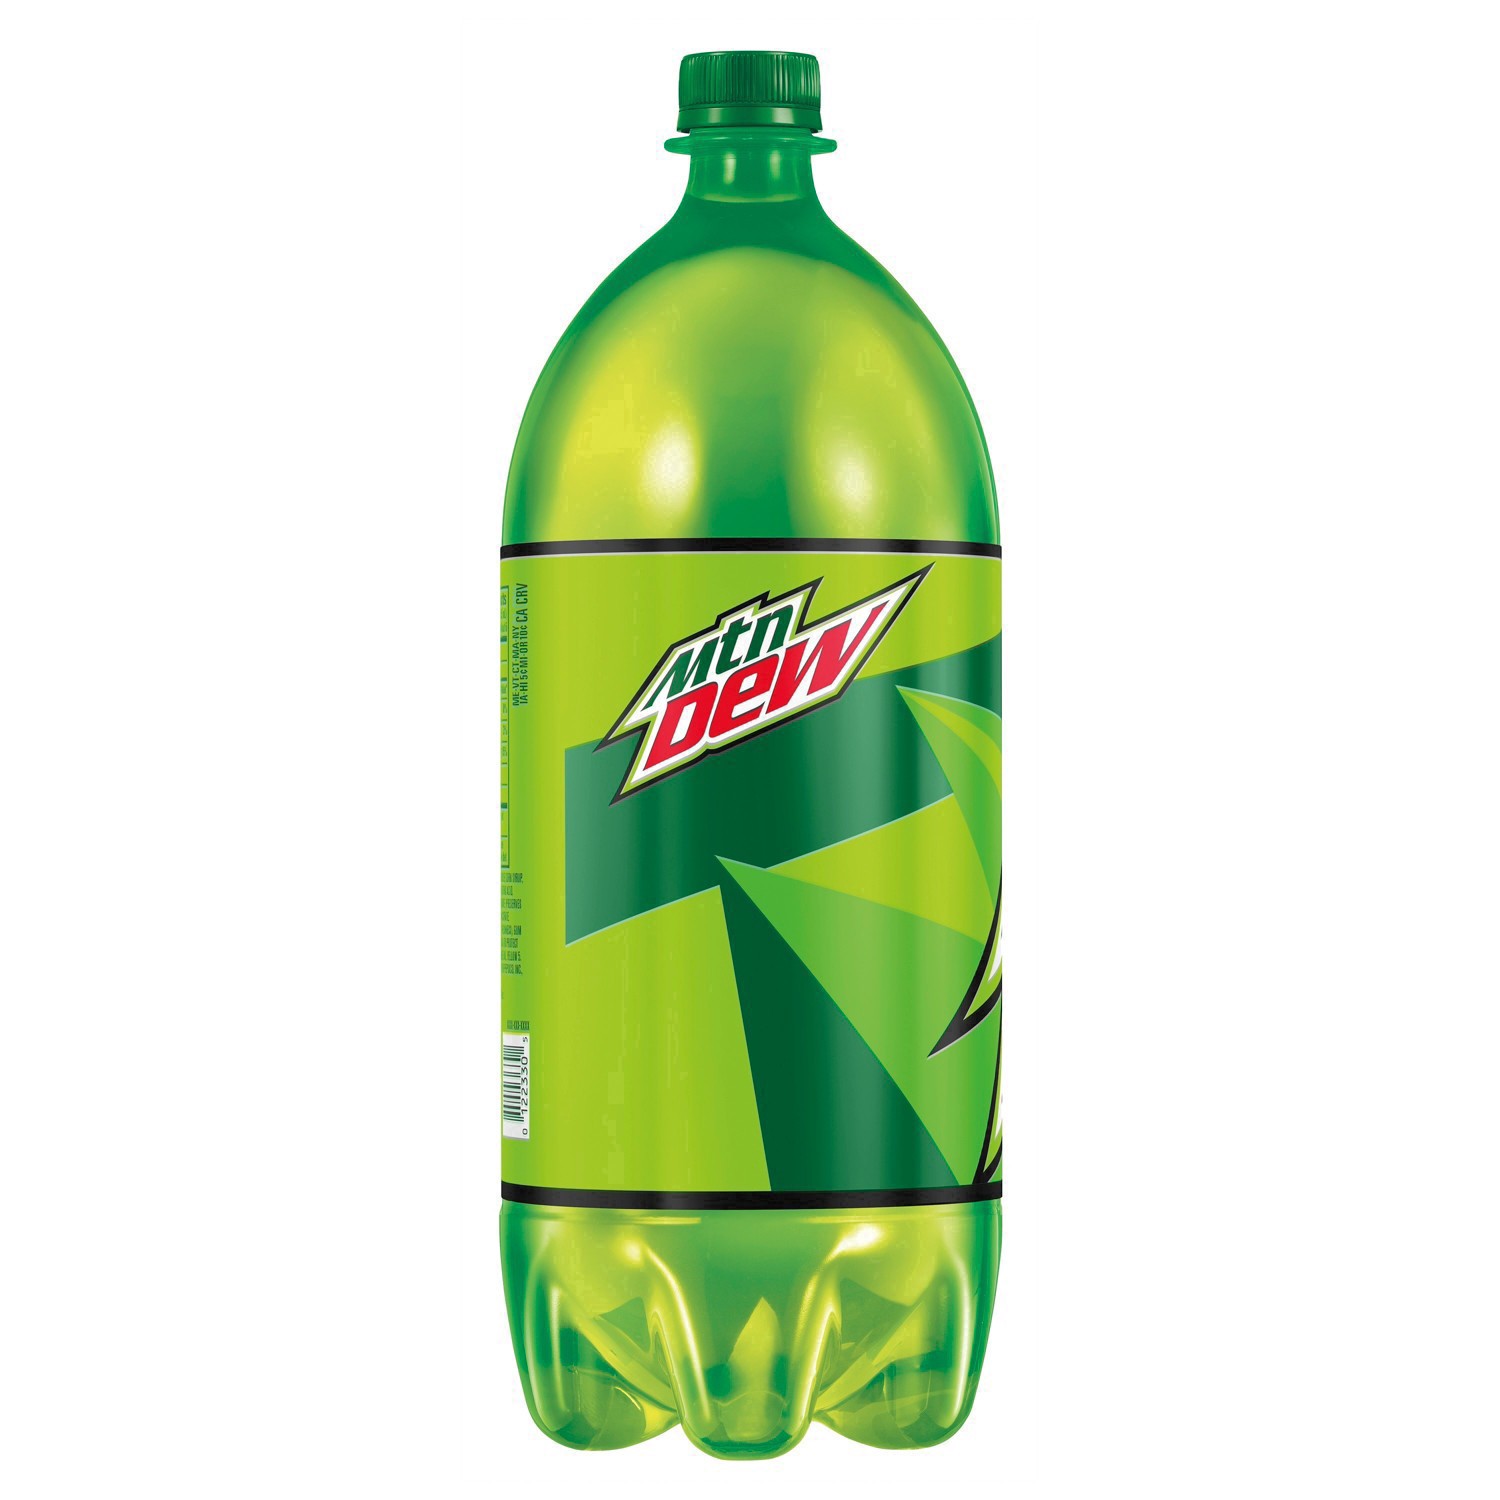 Mountain Dew Diet Soda 16.9 oz Bottles - Shop Soda at H-E-B